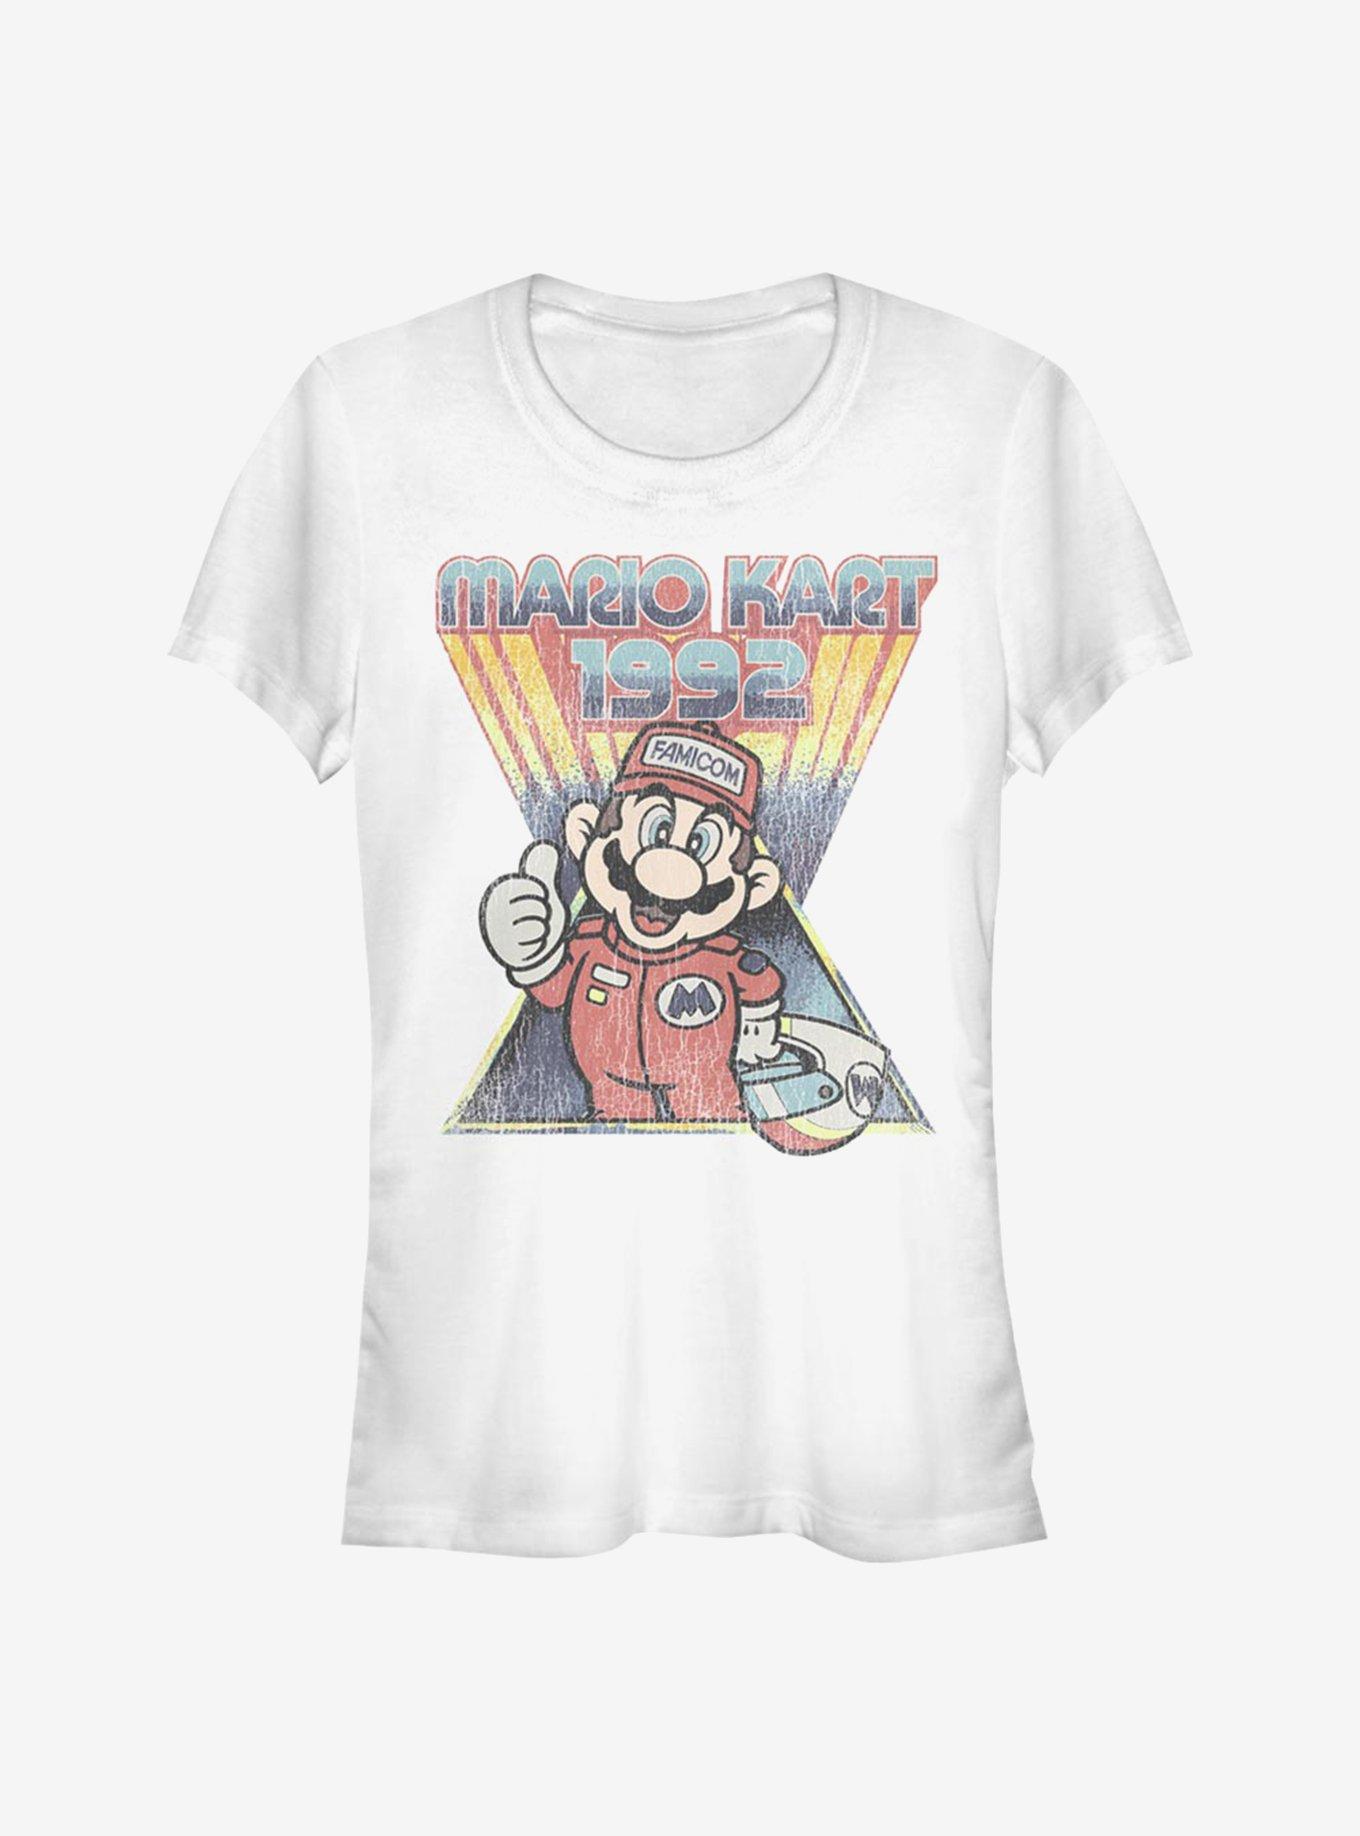 Super Mario Race Of 1992 Girls T-Shirt, WHITE, hi-res